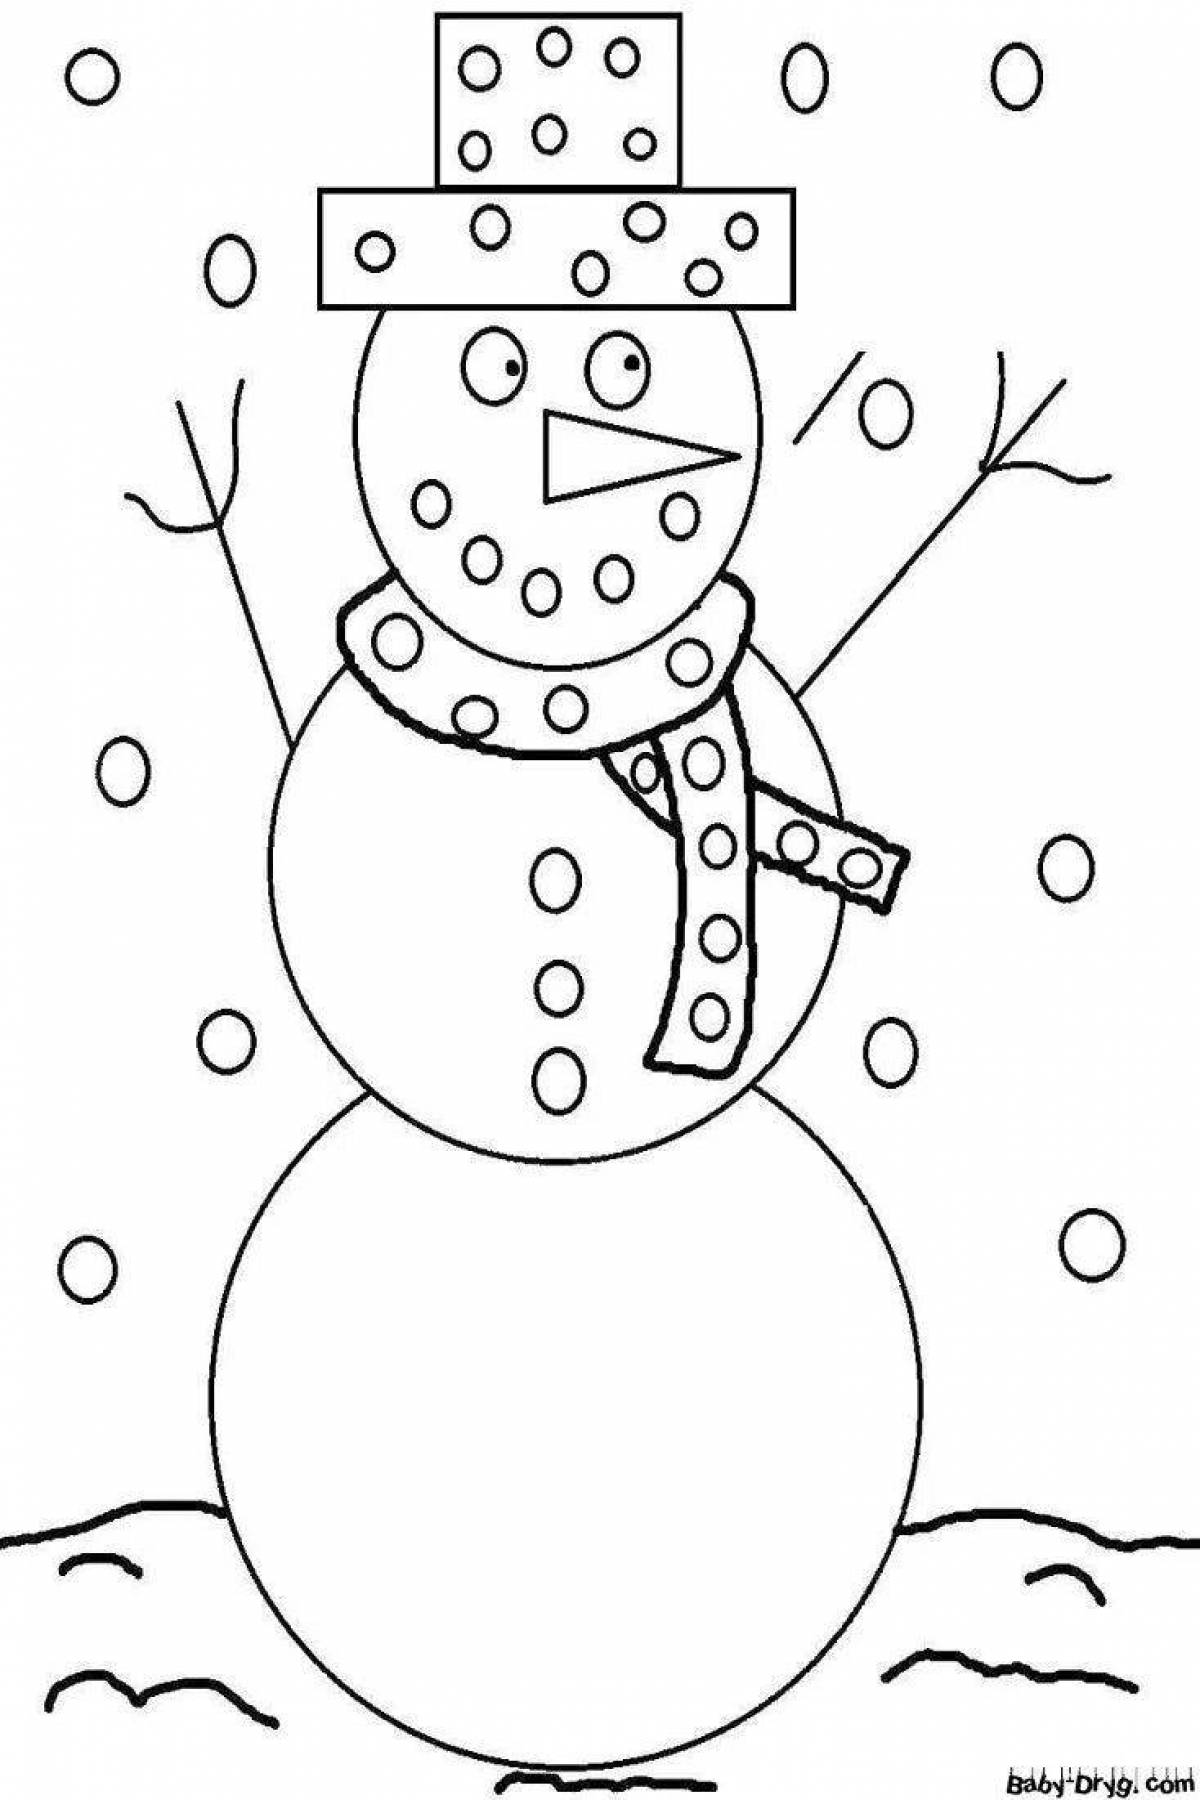 Coloring page joyful big snowman